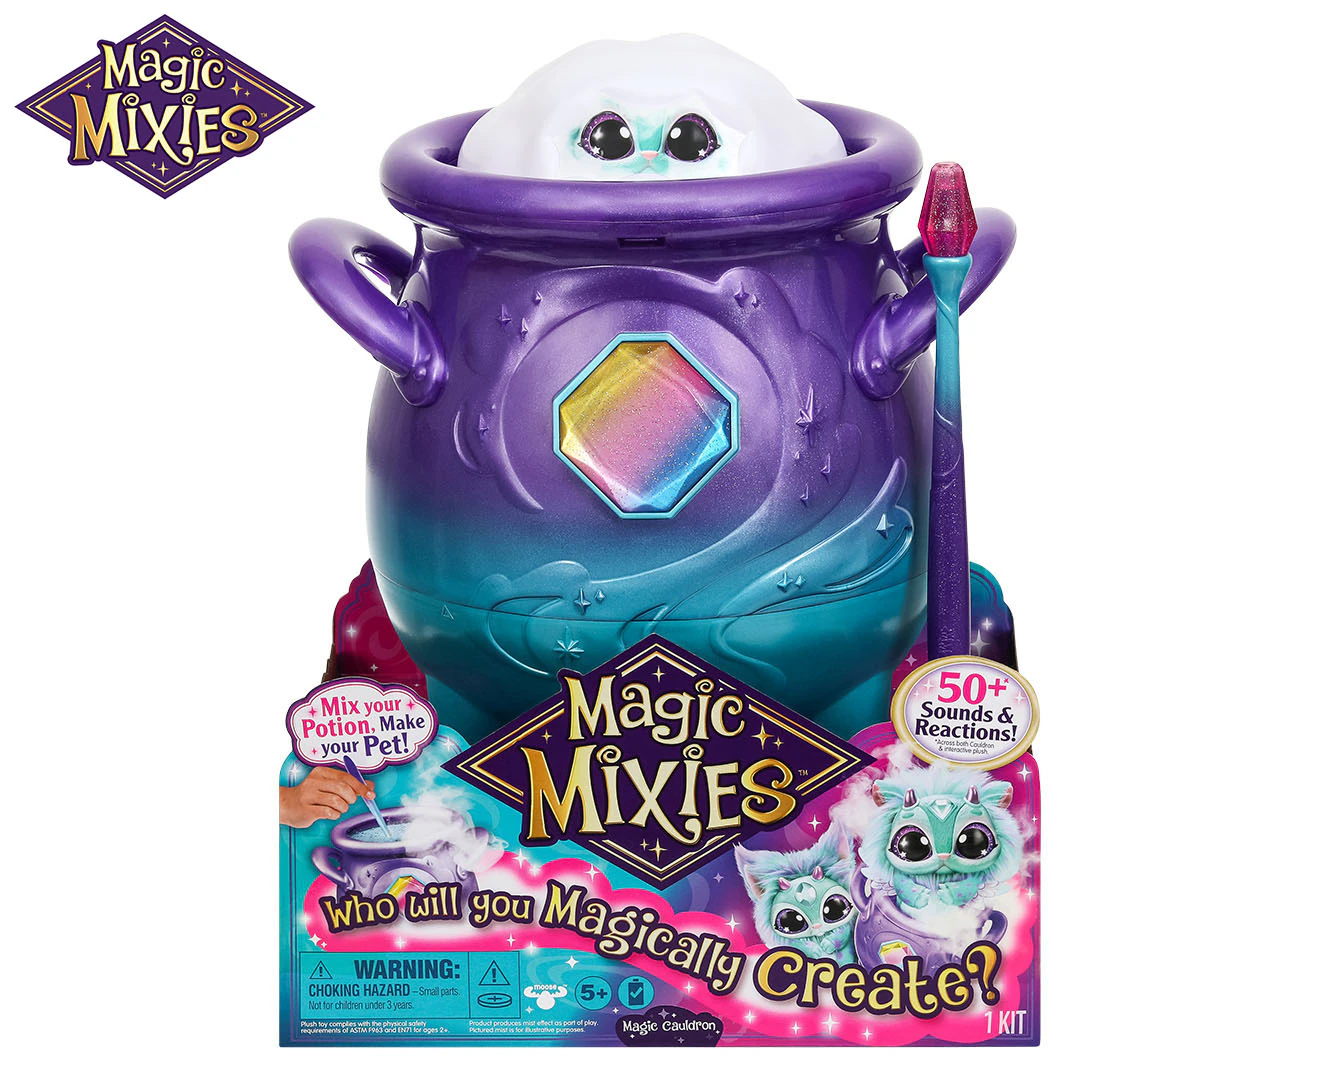 Magic MiXiES 14655 Mist Refill Cauldron Instructions